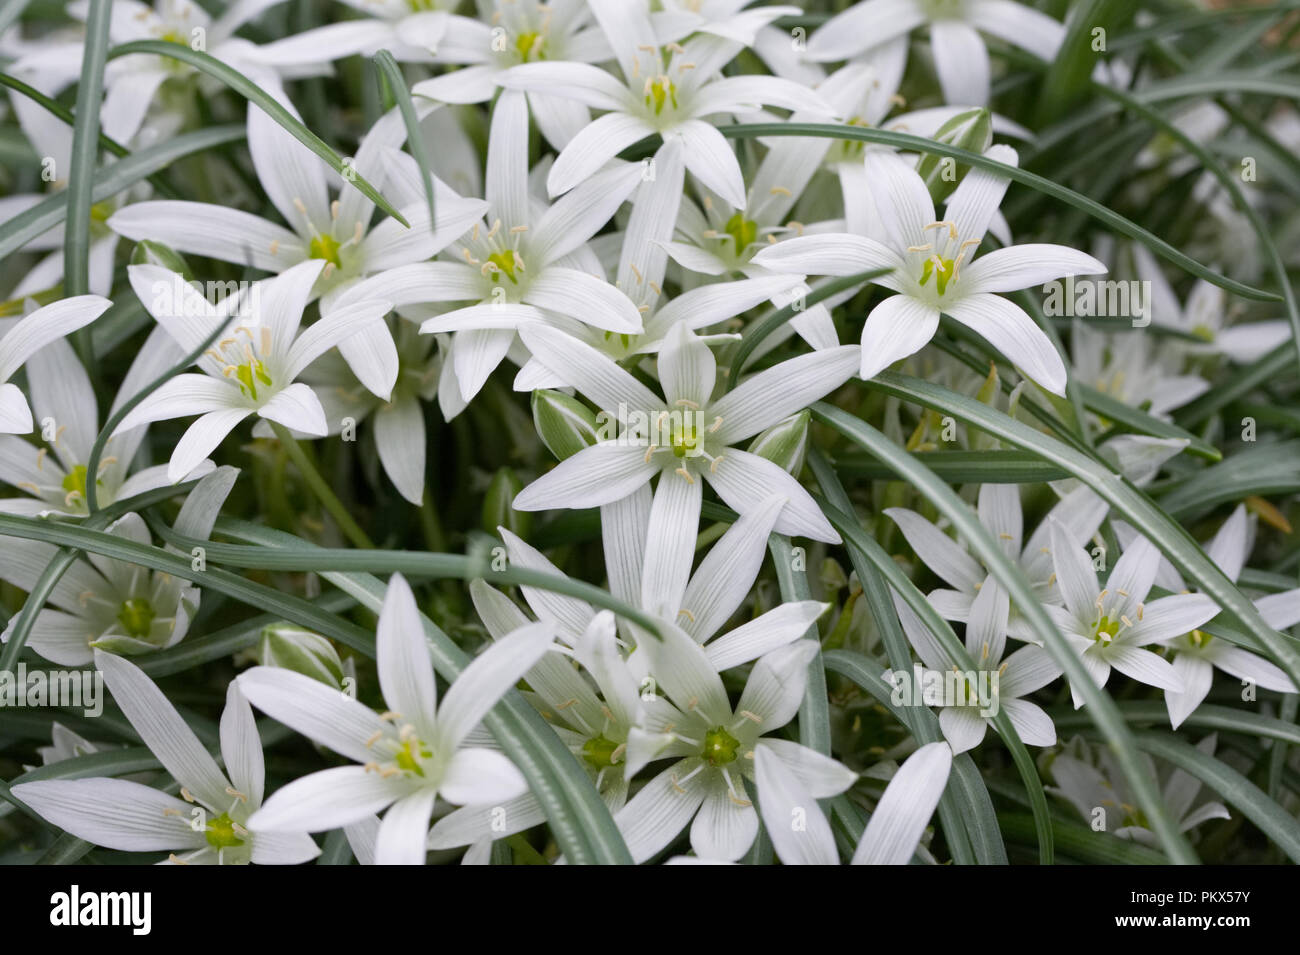 Ornithogalum sigmoideum flowers. Stock Photo